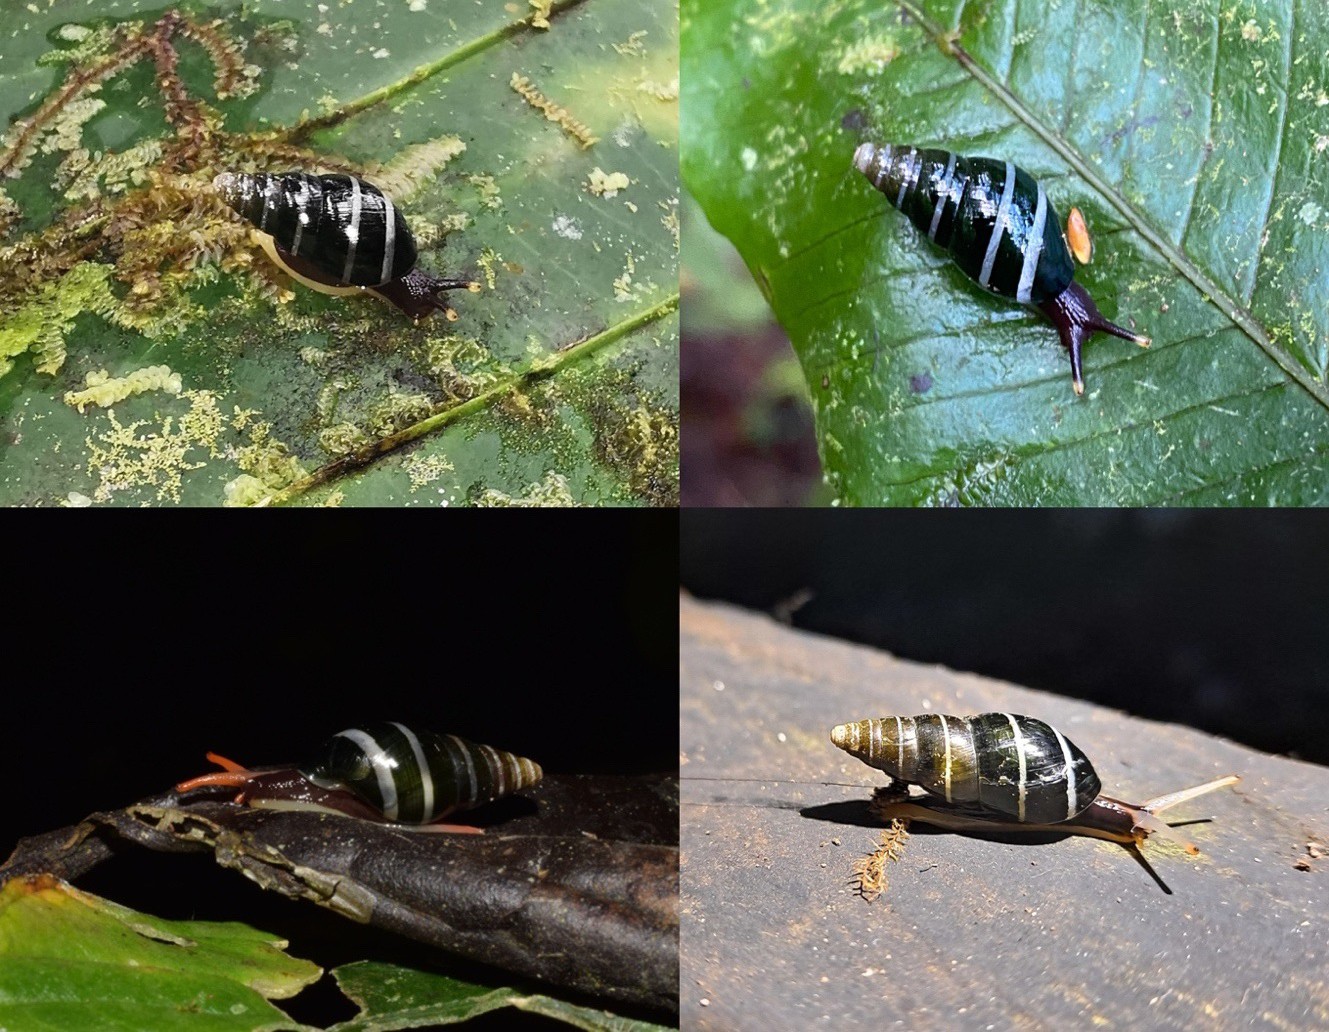 Variation
of colouration in life of Zoniferella
riveti var. bizonalis / Z. bicingulata. Photos by Barna Takats (top left), Seth Ames (top right), Ben
Stegenga (bottom left), Eduardo Obando (bottom right), iNaturalist 

(CC-BY-NC).